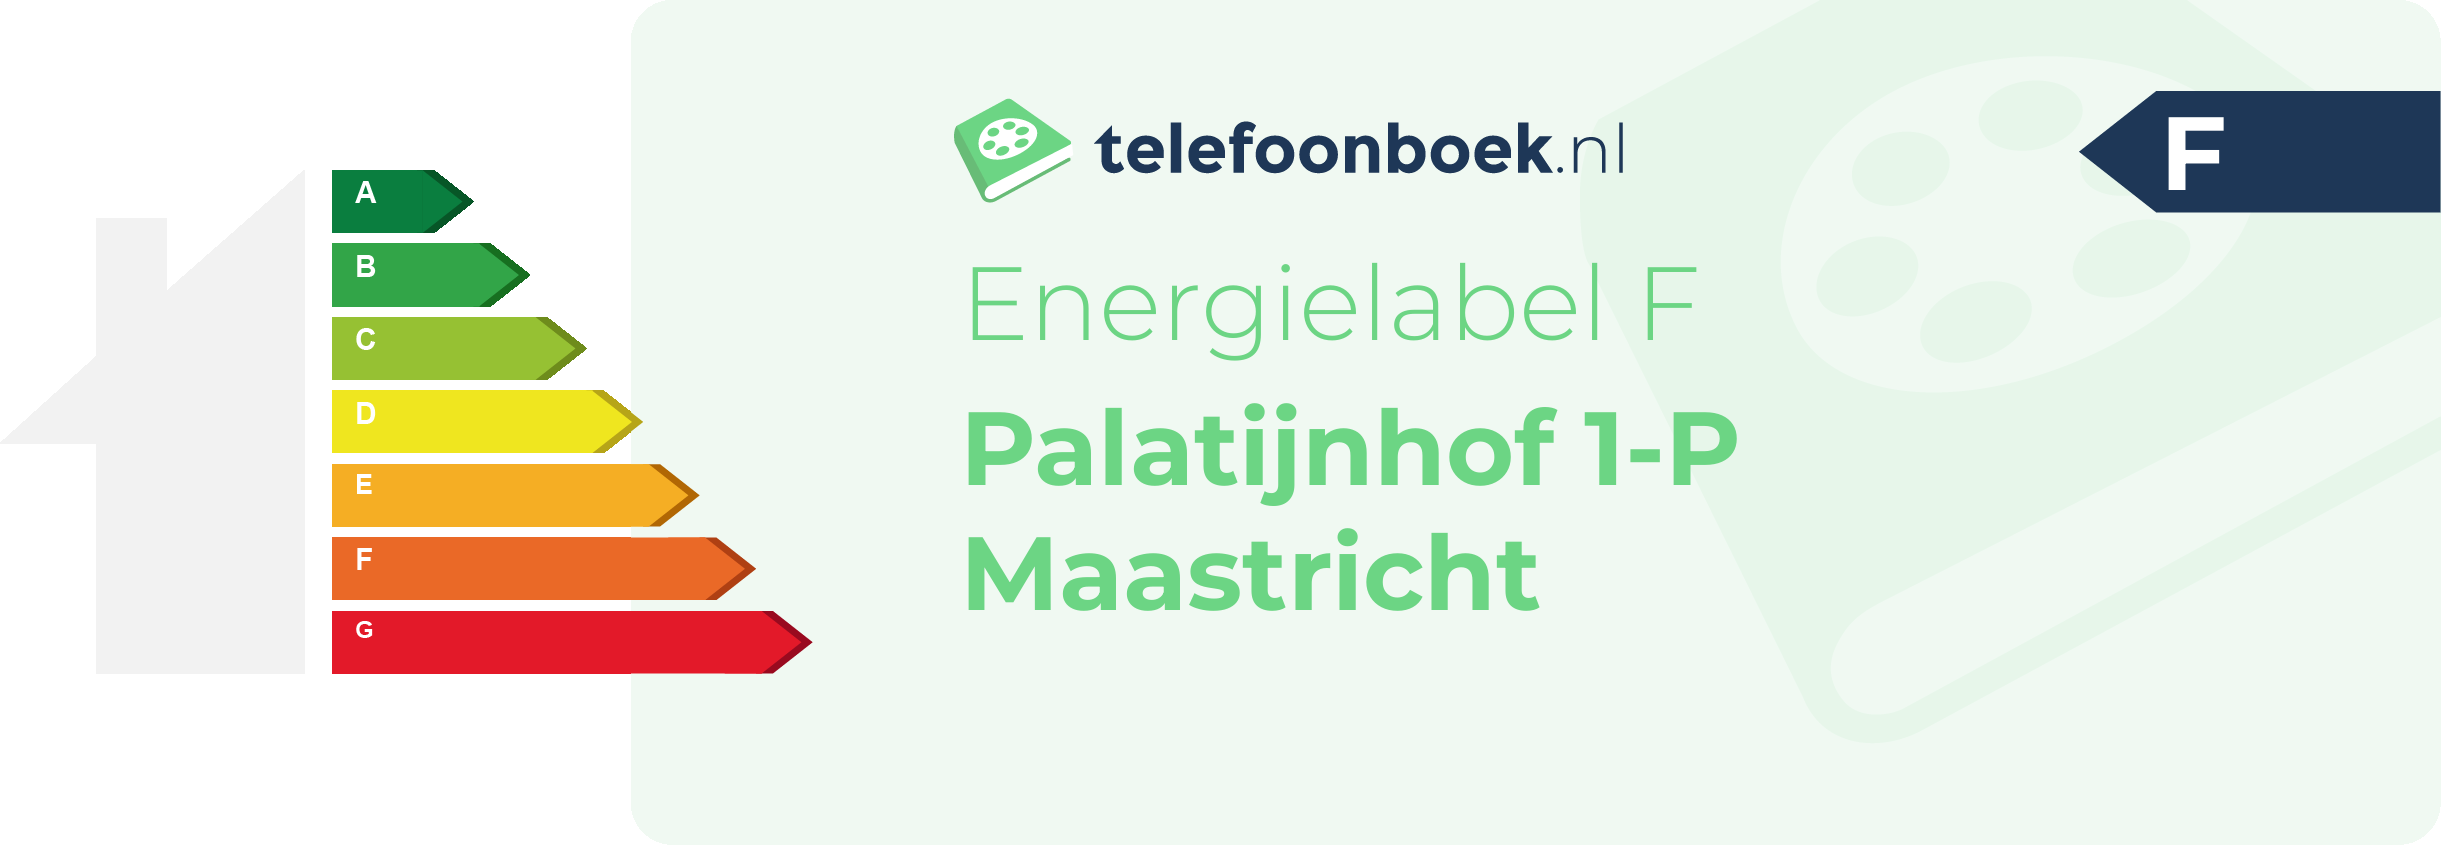 Energielabel Palatijnhof 1-P Maastricht